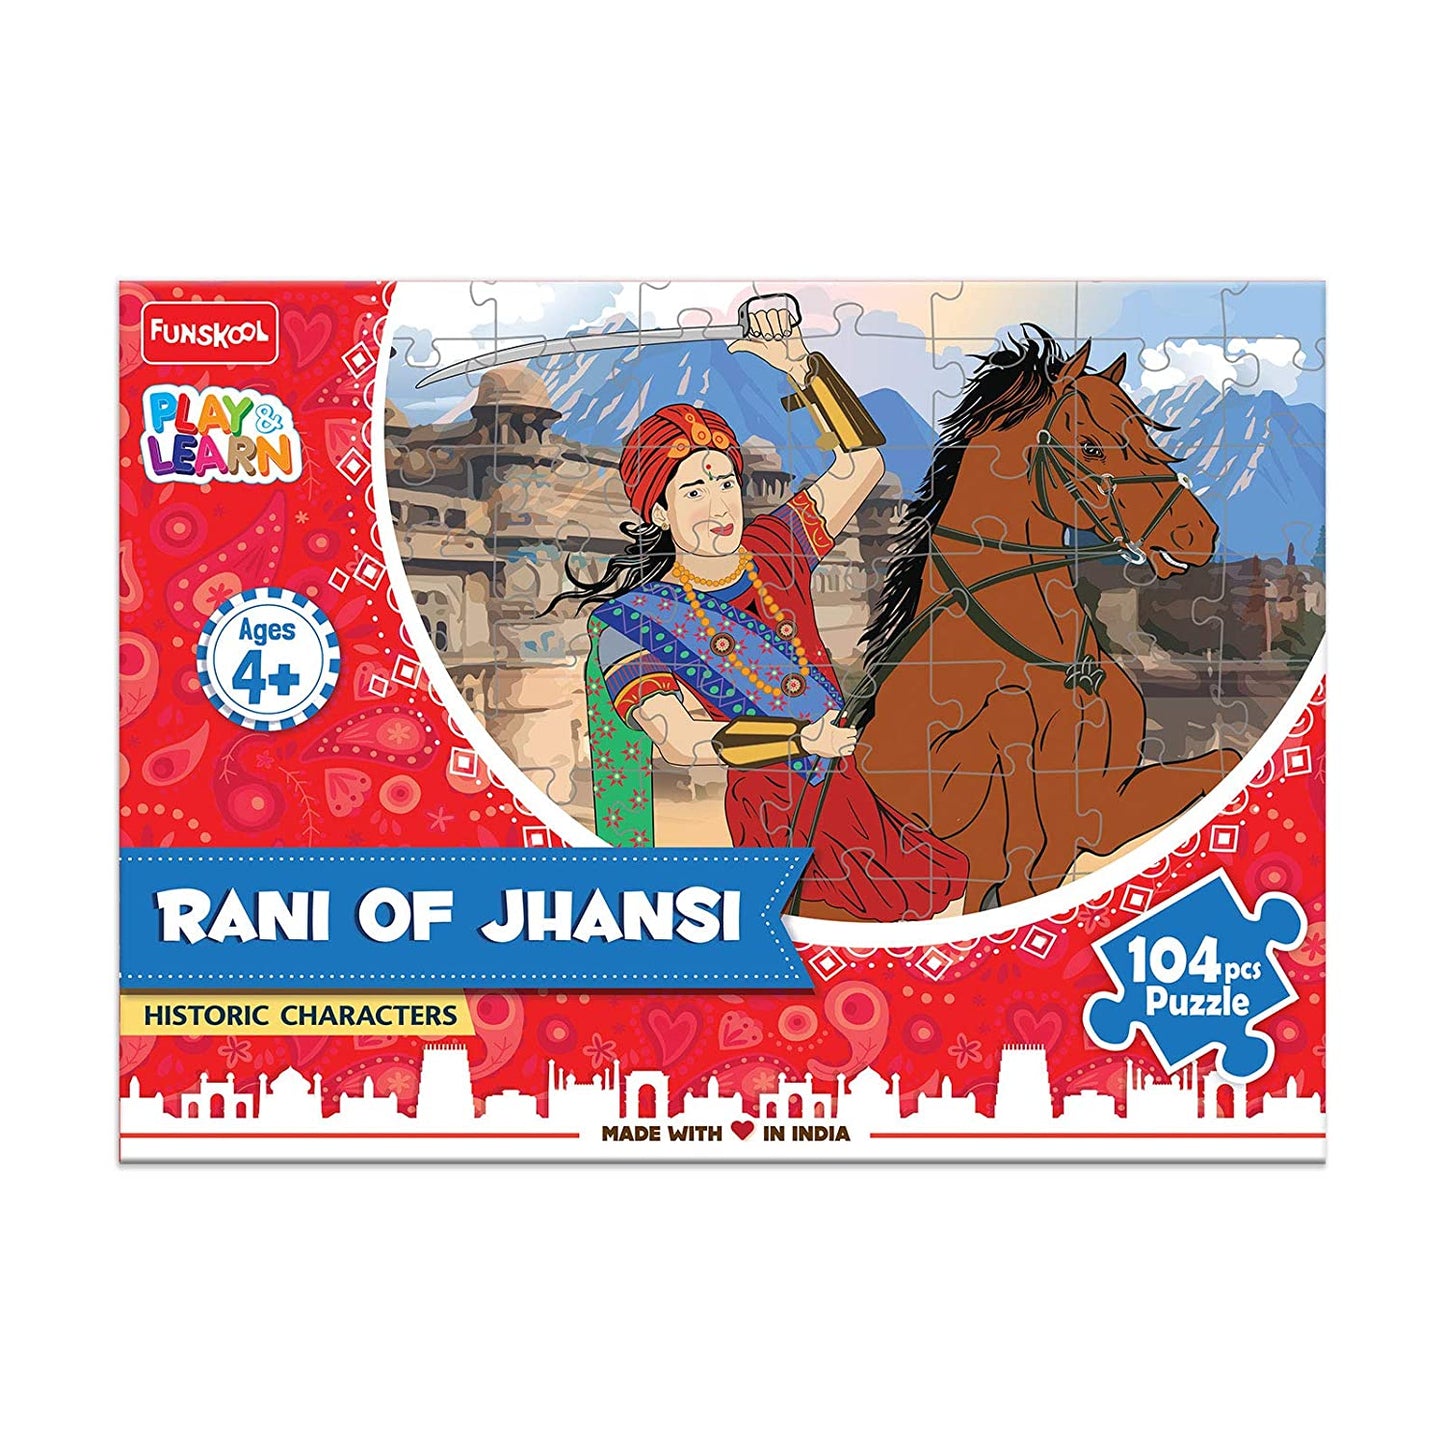 RANI OF JHANSI HISTORIC CHARACTERS 104 PCS PUZZLE FUNSKOOL FOR KIDS